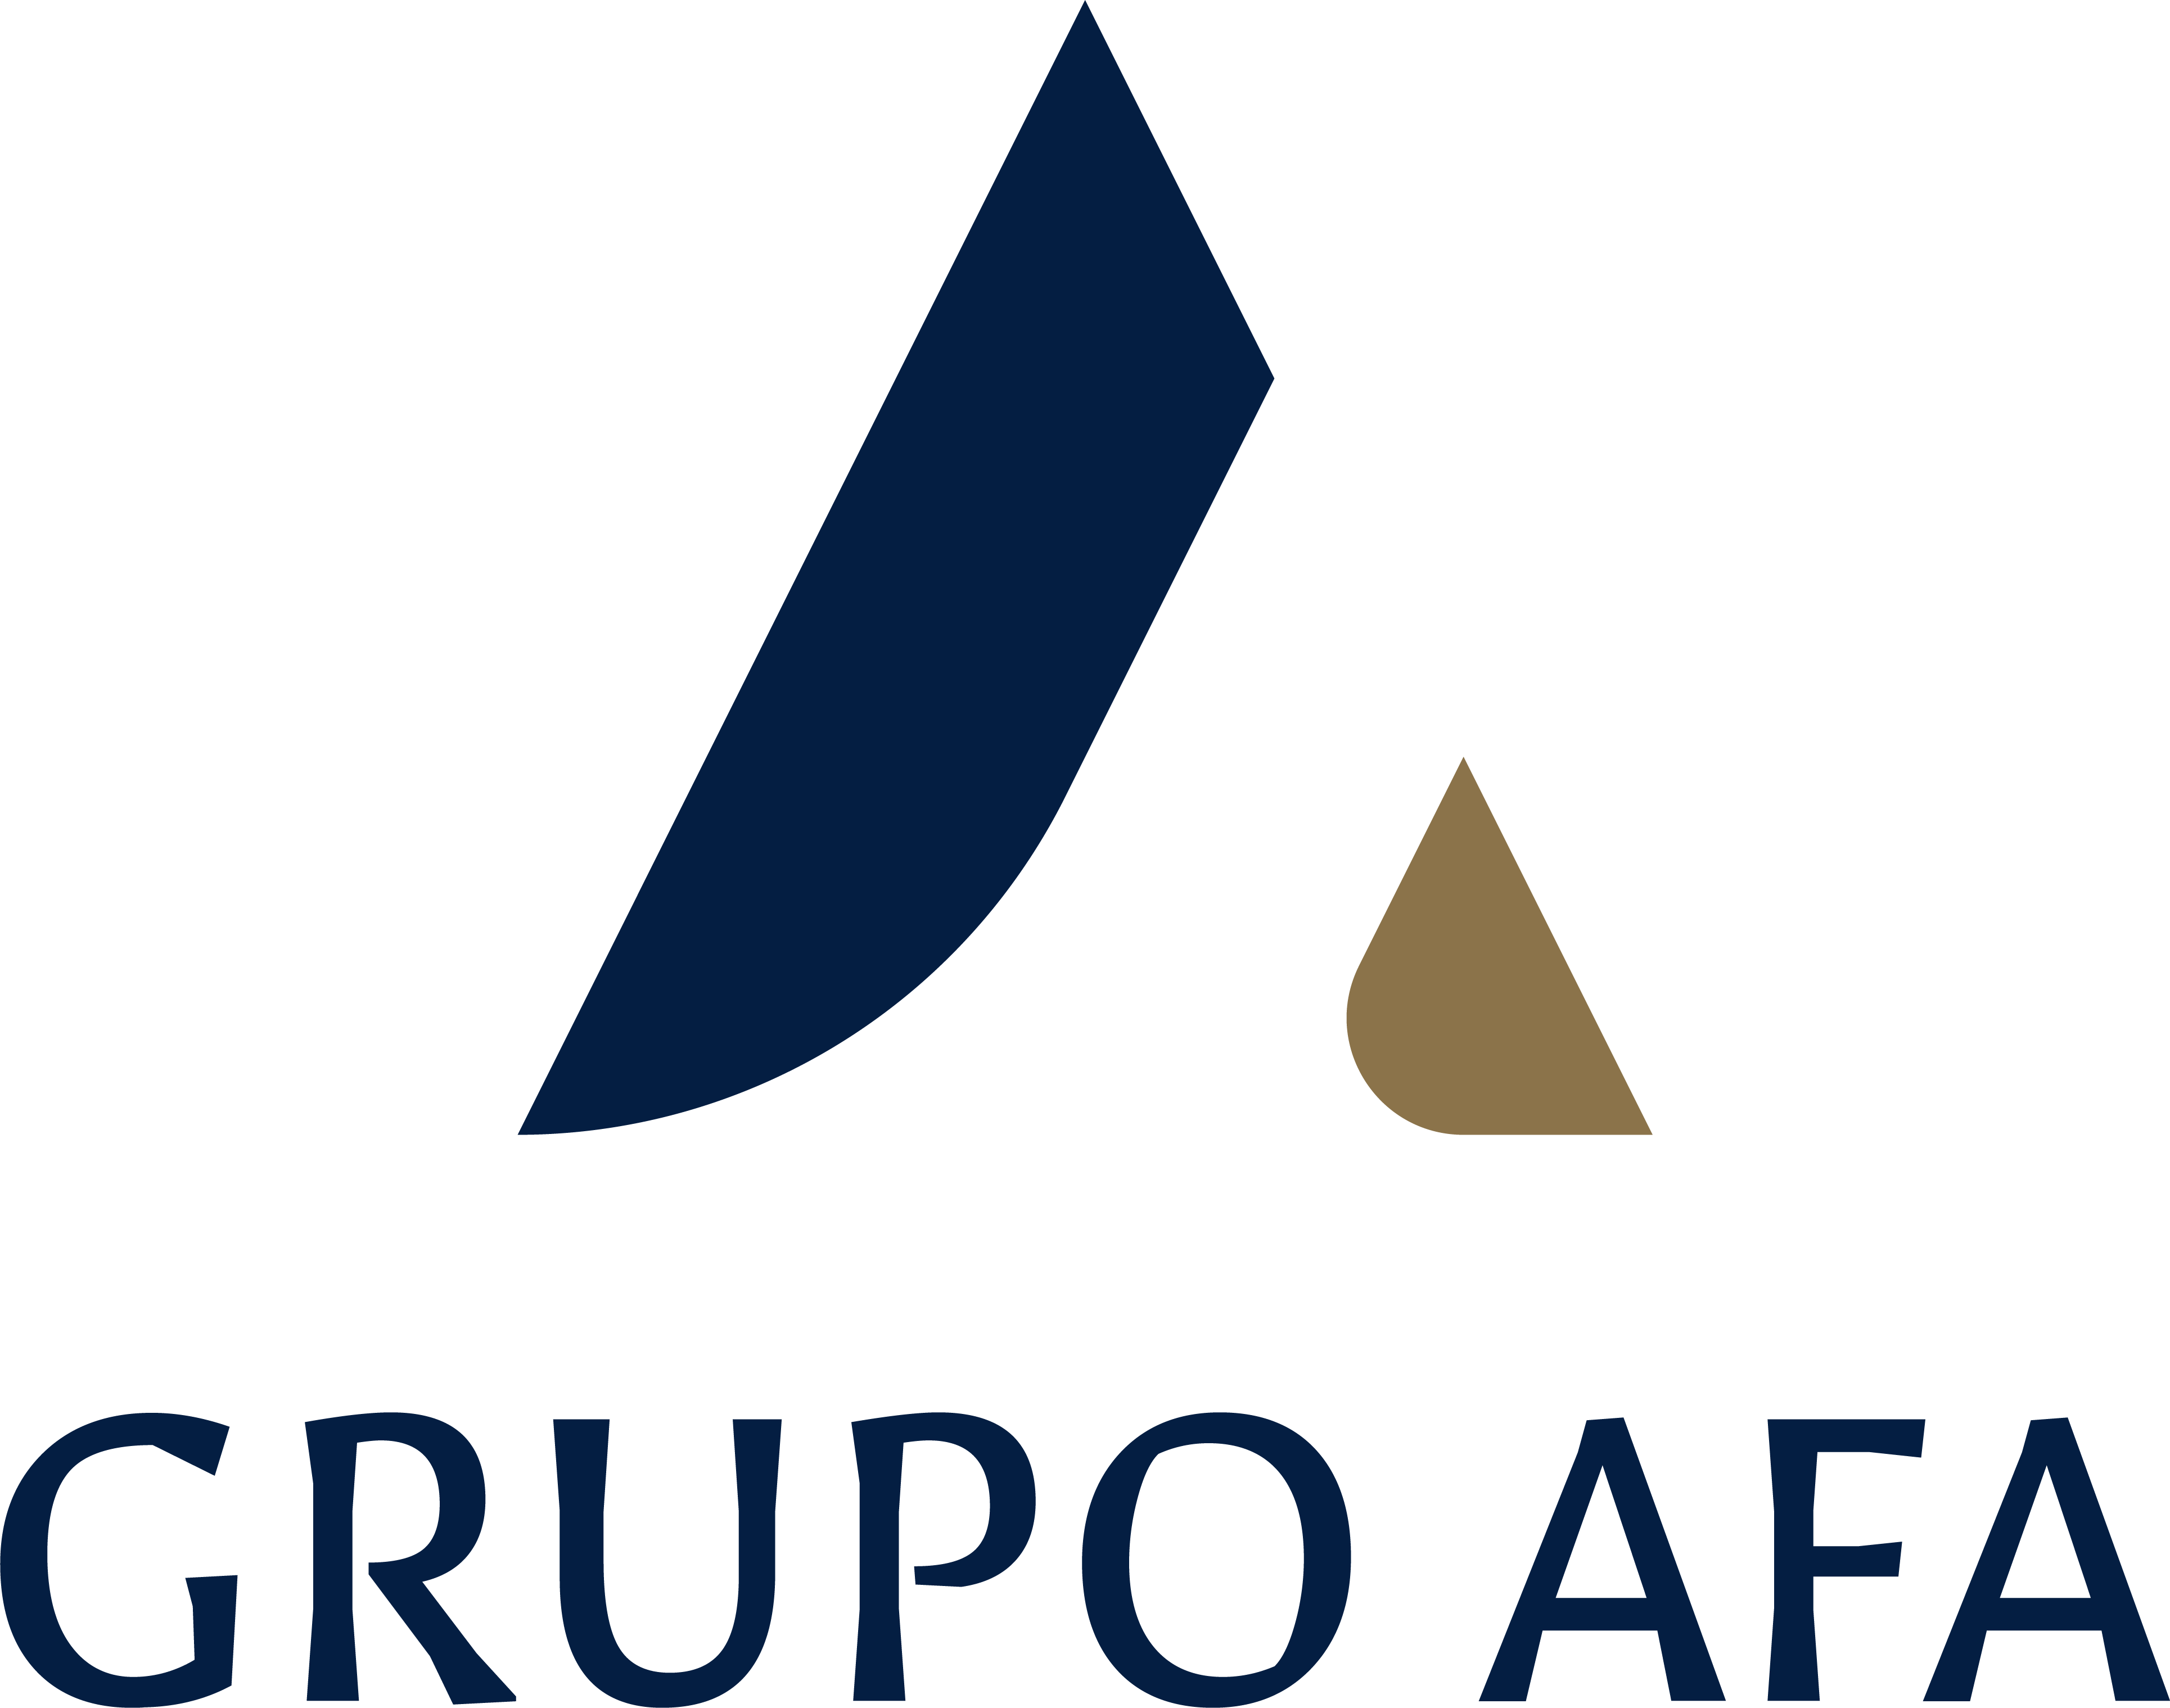 Logo Grupo AFA